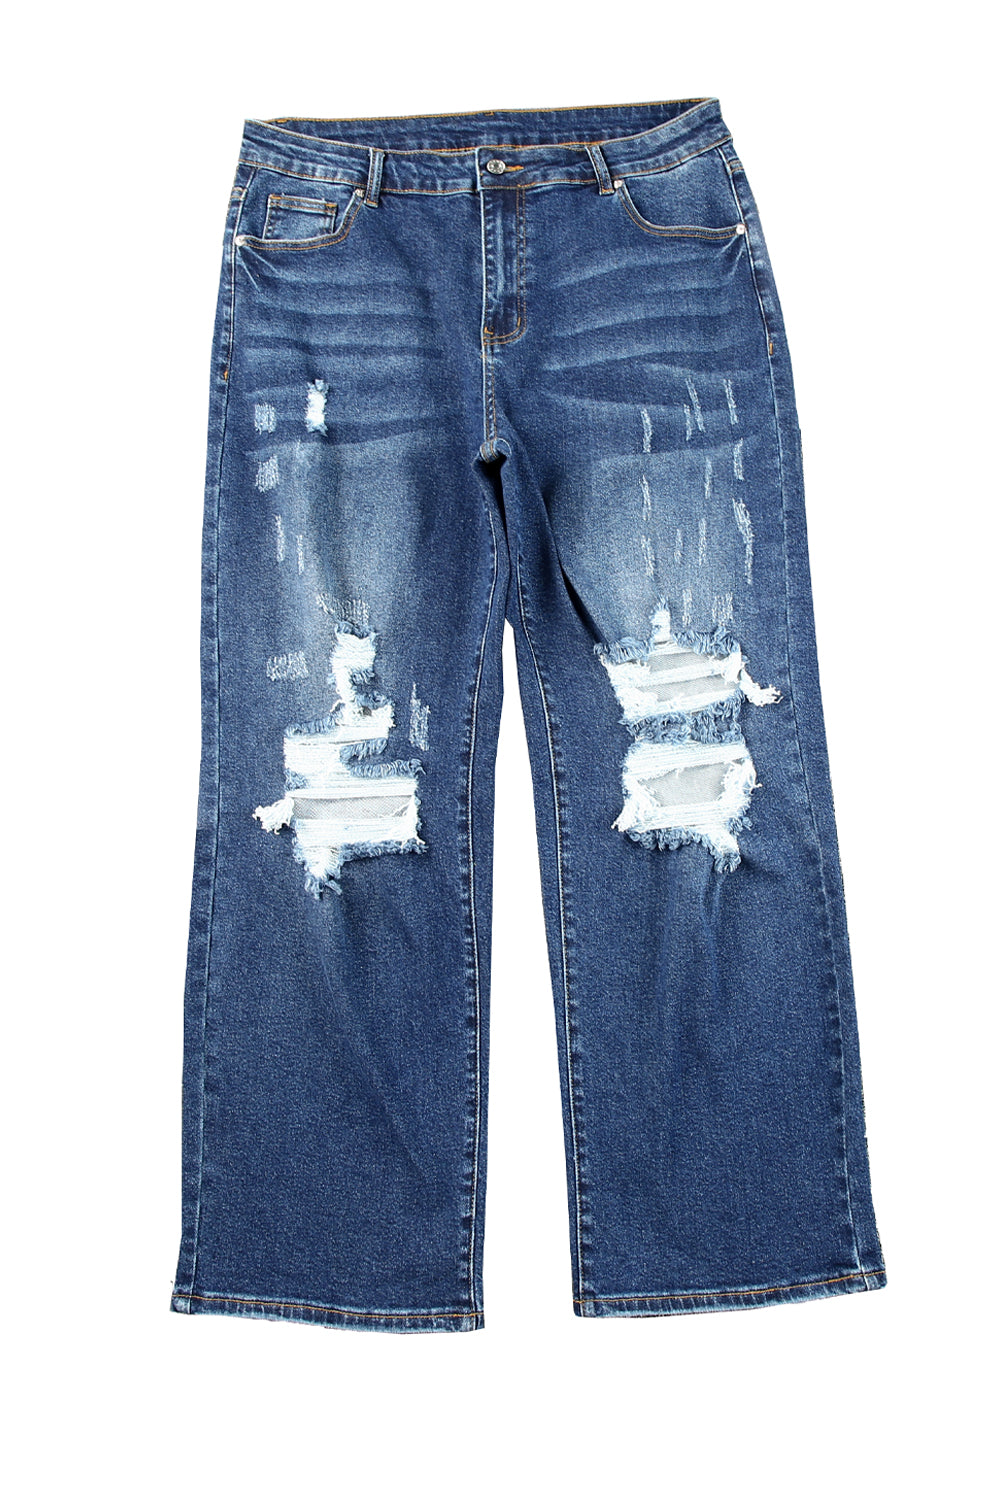 Blue High Waist Distressed Plus Size Jeans